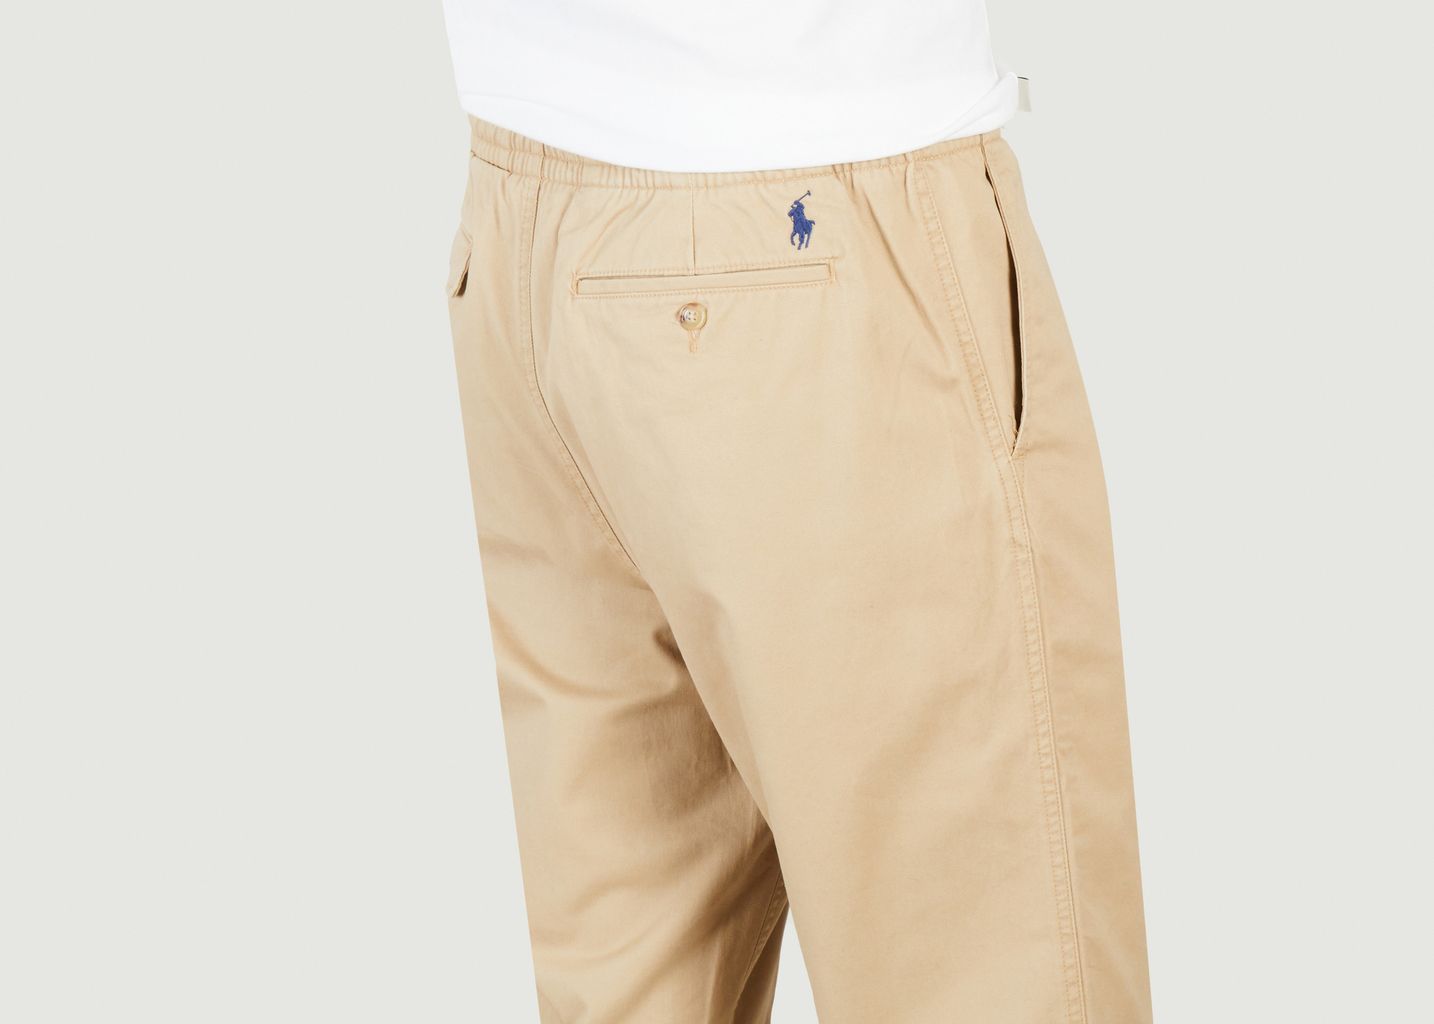 BCBG straight cut chino pants - Polo Ralph Lauren